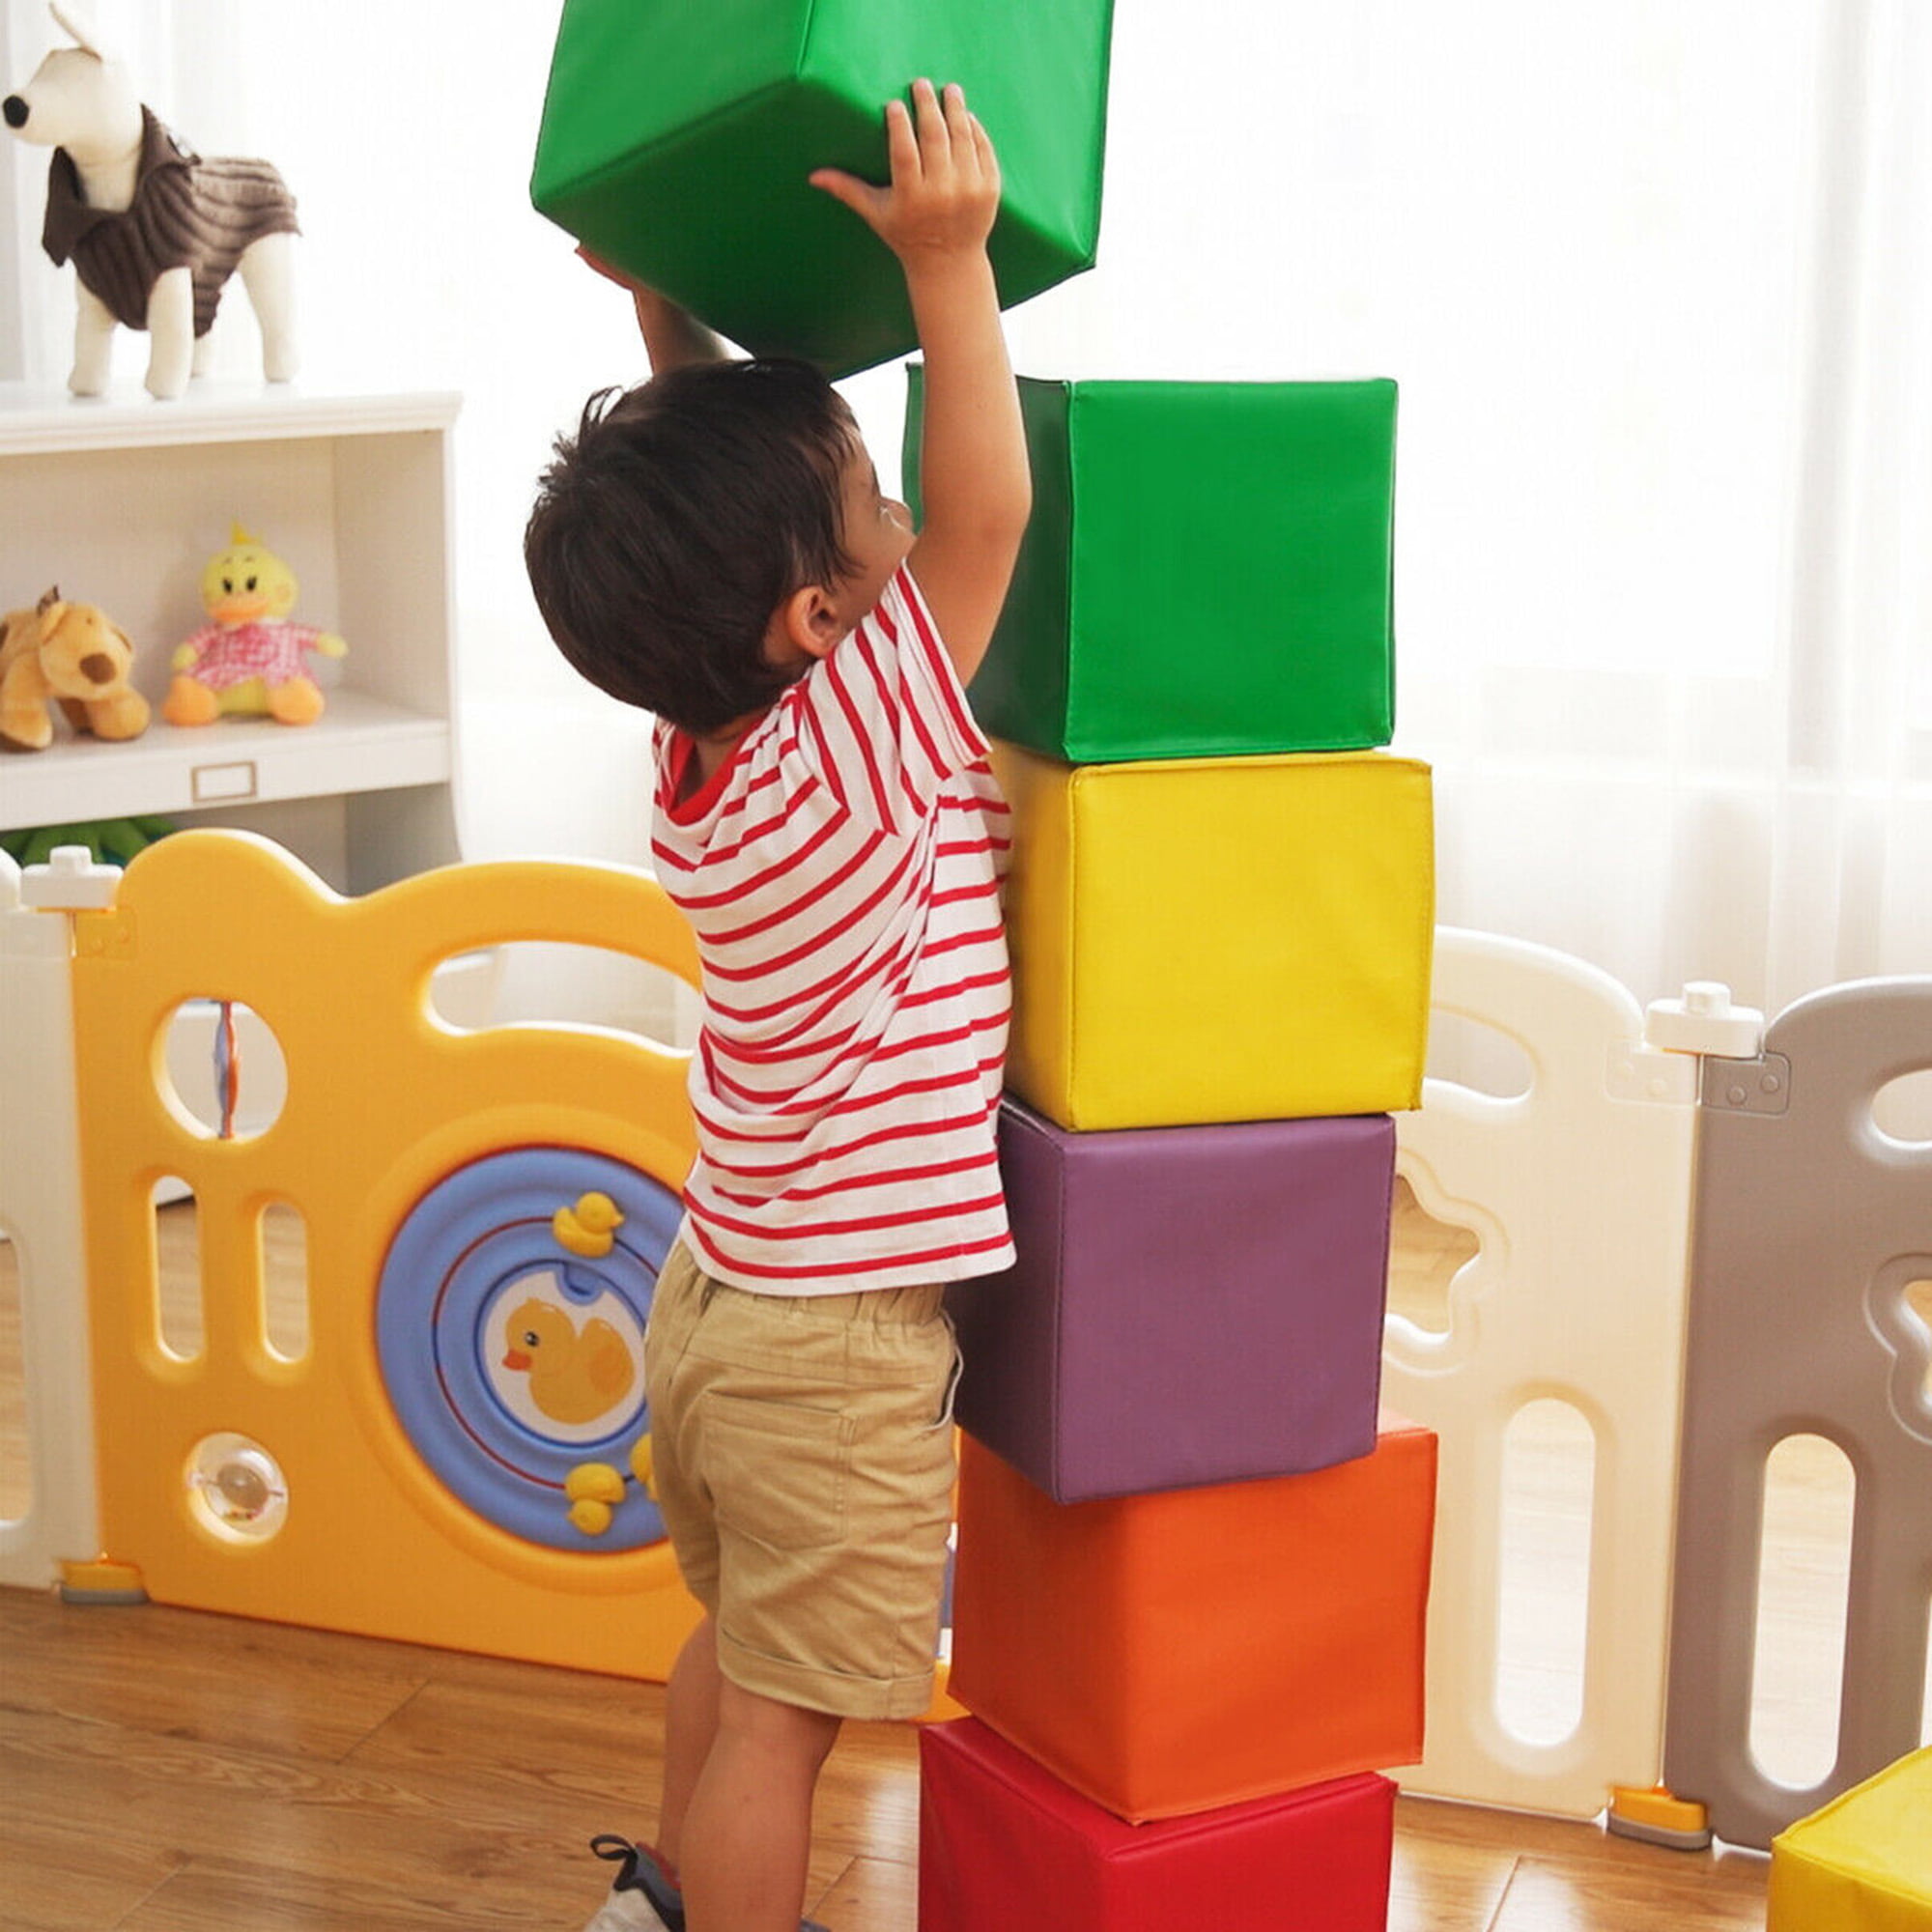 12 Kids Baby Soft PU Foam Big Building Blocks Set Play Toy Infant Toddler Room 